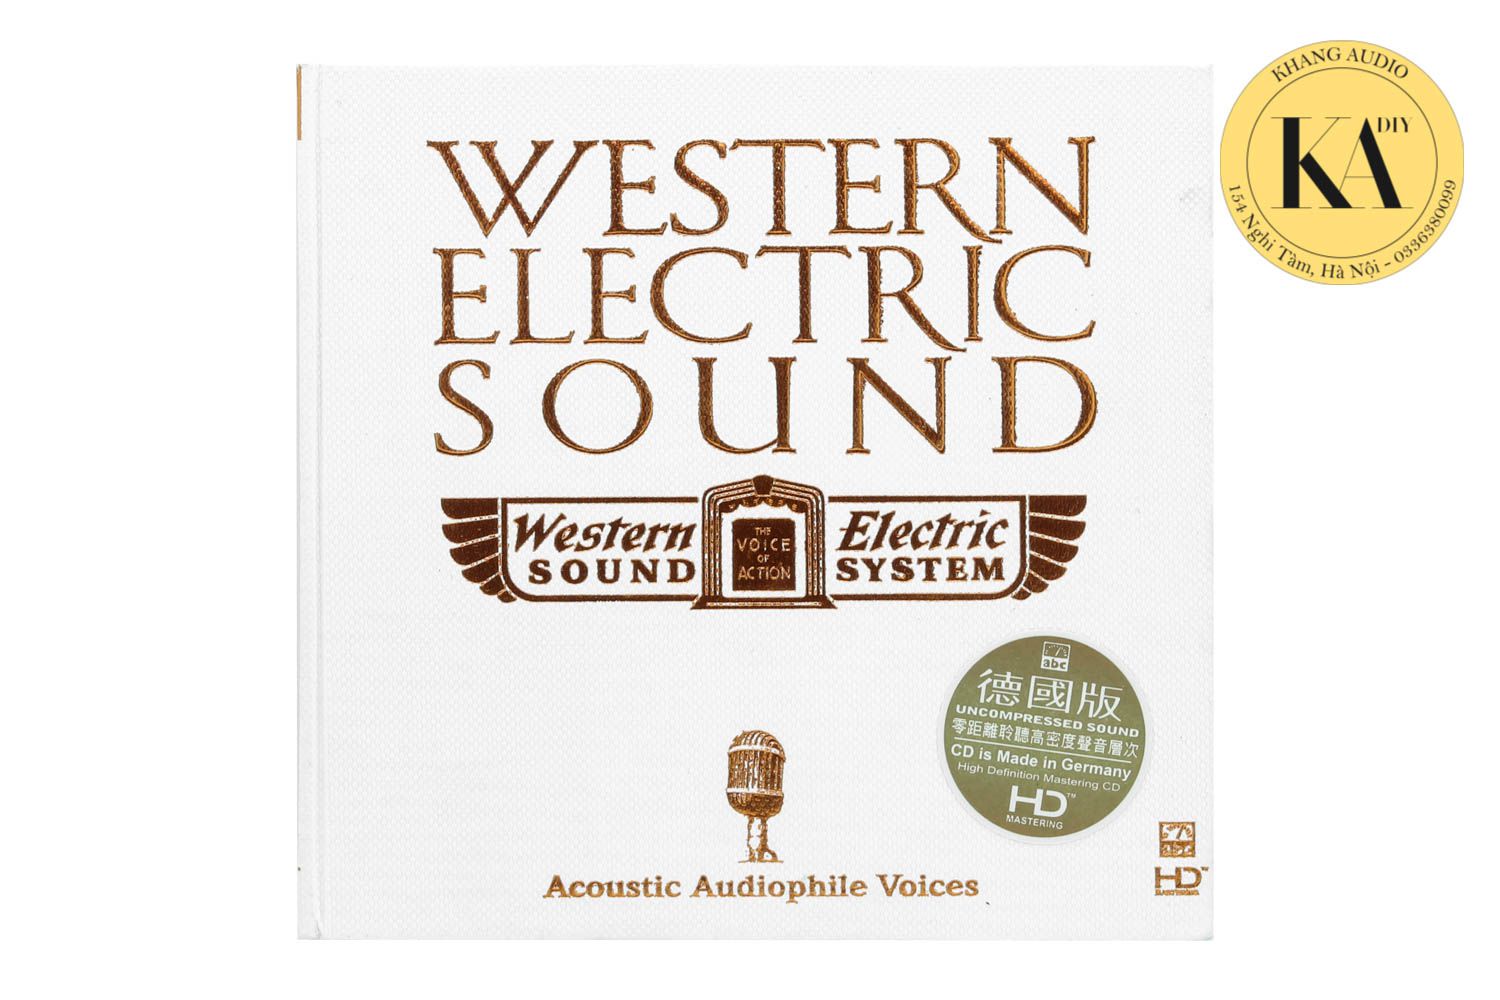 Western Electric Sound - Acoustic Audiophile Voices Khang Audio 0336380099